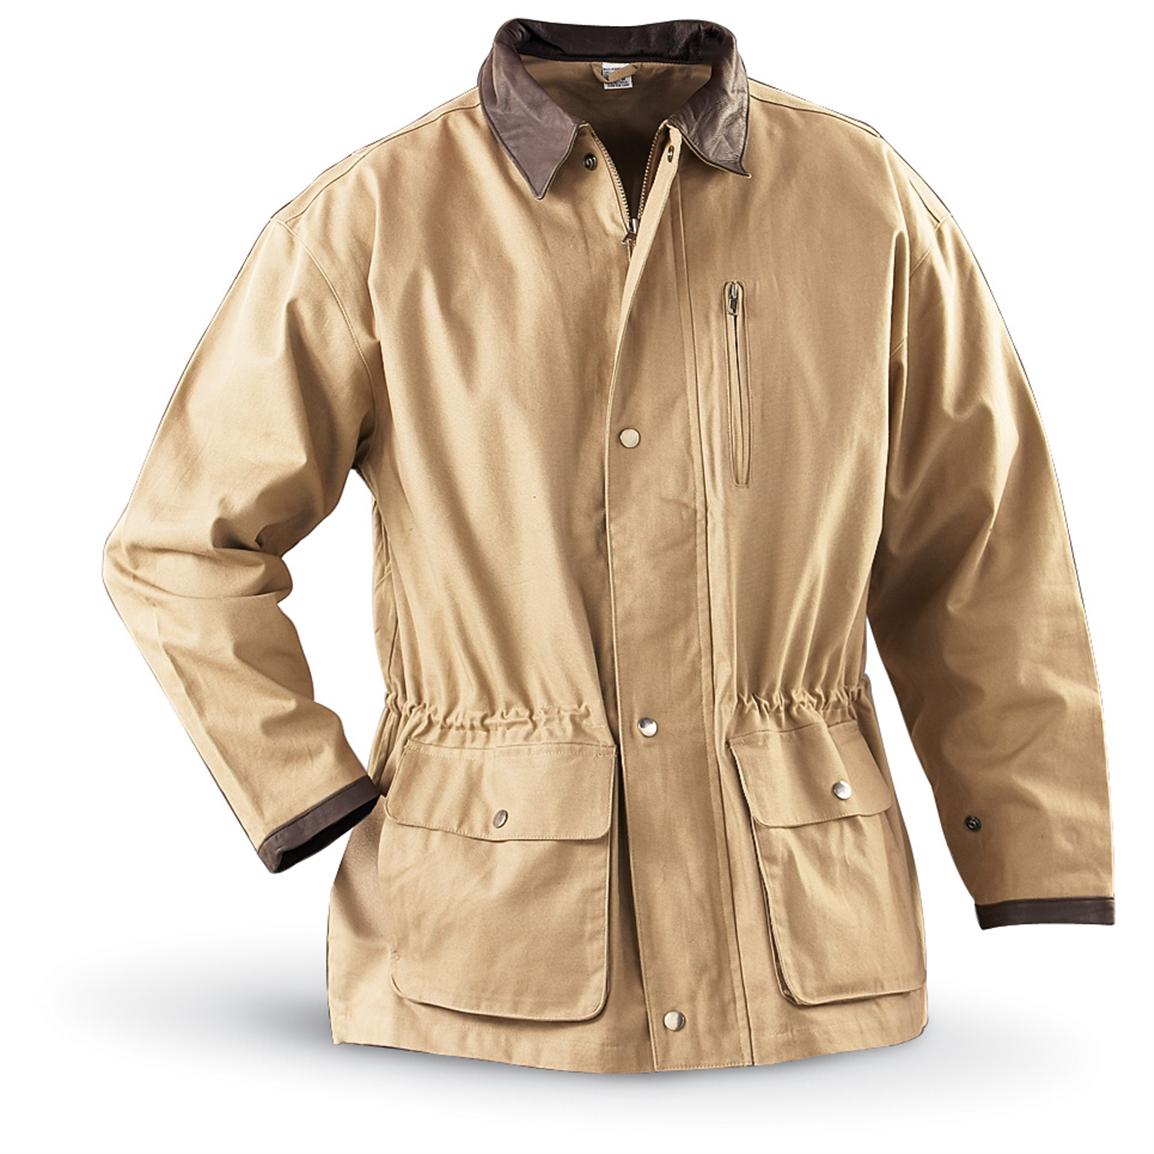 Men's Western Canvas Jacket, Khaki - 130279, Insulated Jackets & Coats